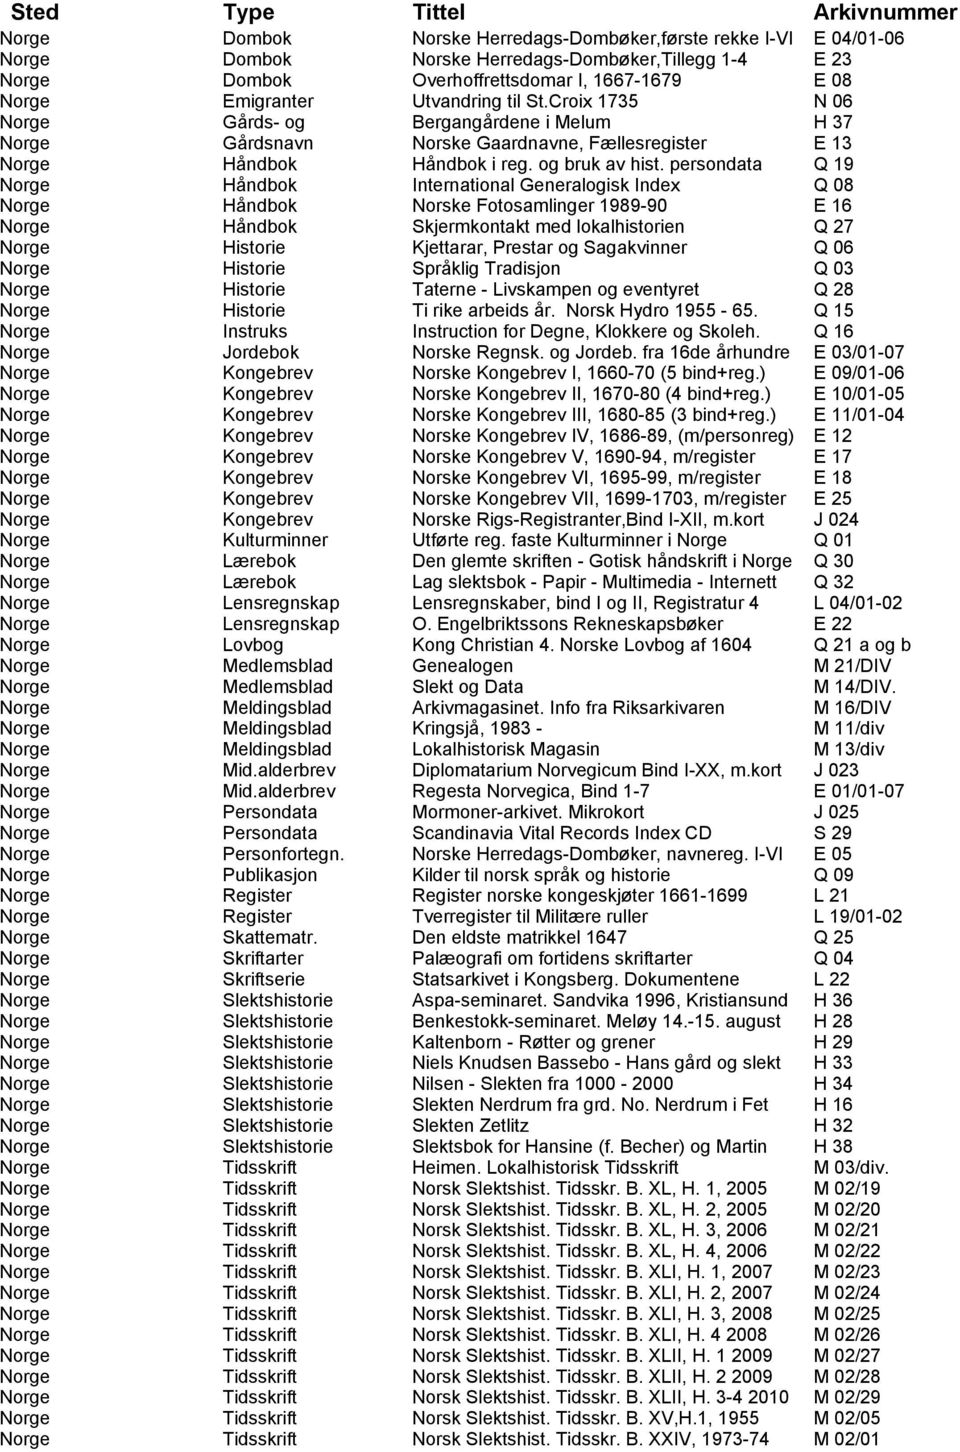 persondata Q 19 Norge Håndbok International Generalogisk Index Q 08 Norge Håndbok Norske Fotosamlinger 1989-90 E 16 Norge Håndbok Skjermkontakt med lokalhistorien Q 27 Norge Historie Kjettarar,